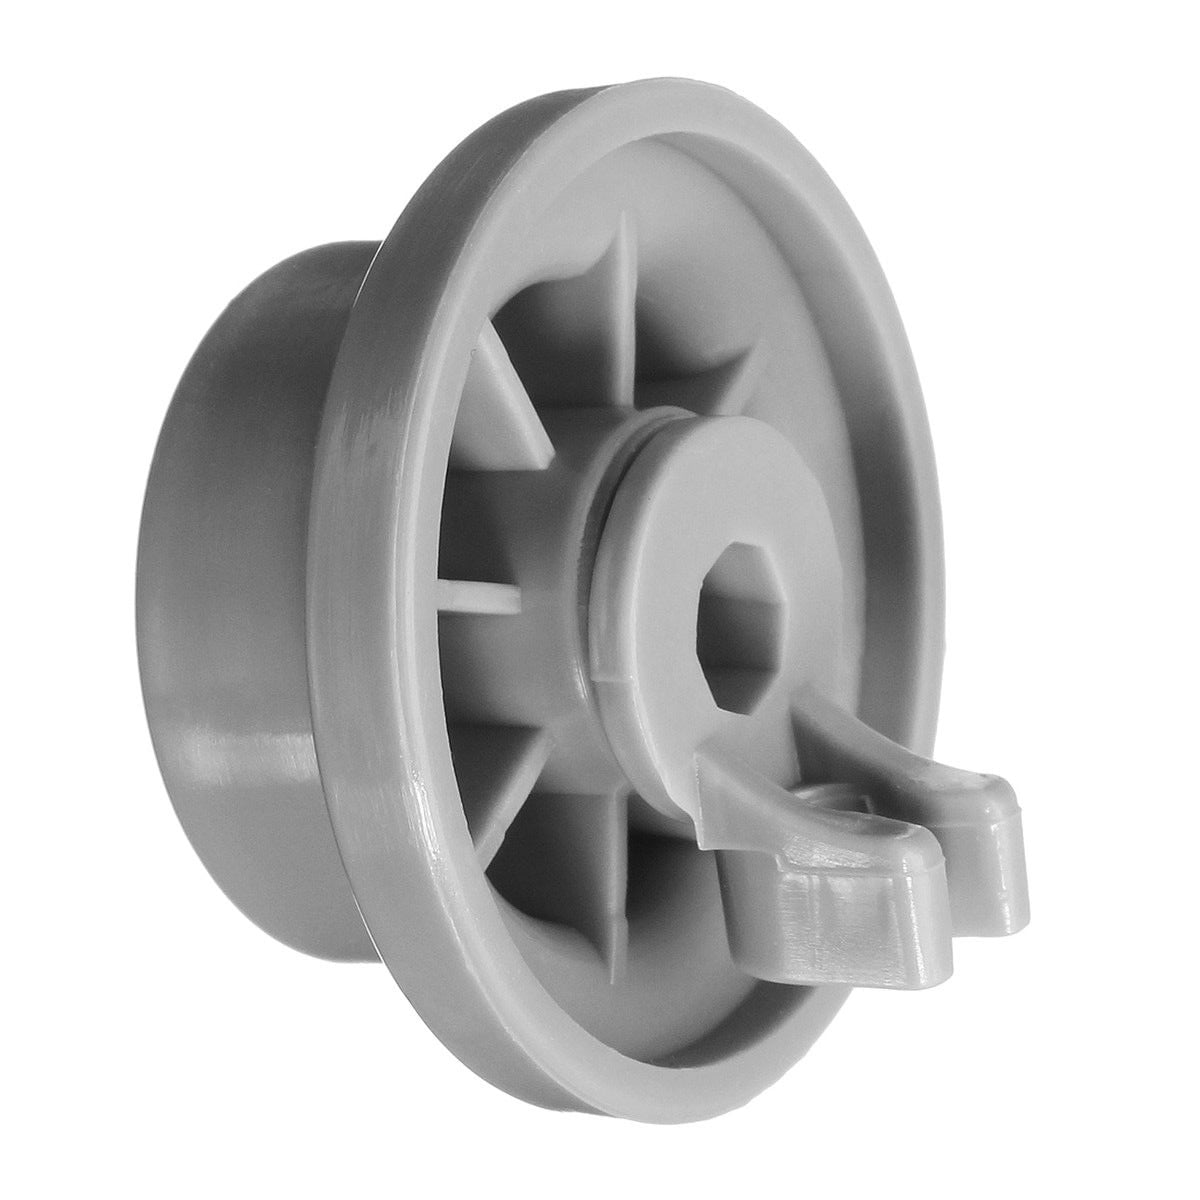 4x 165314 Dishwasher Lower Rack Basket Wheel for Bosch Neff & Siemens 